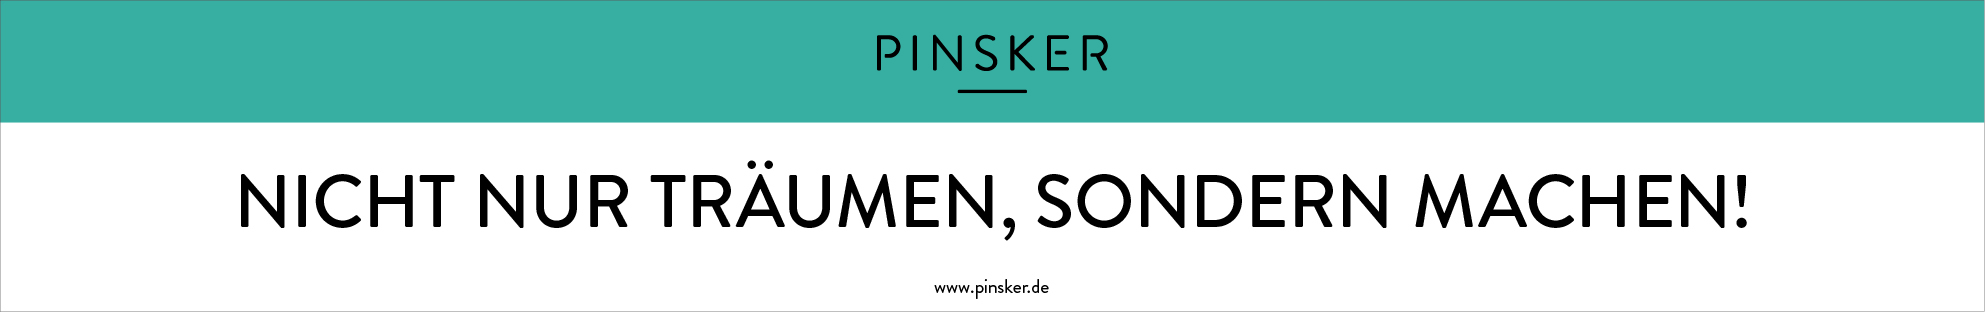 Logo Pinsker 2020 neu